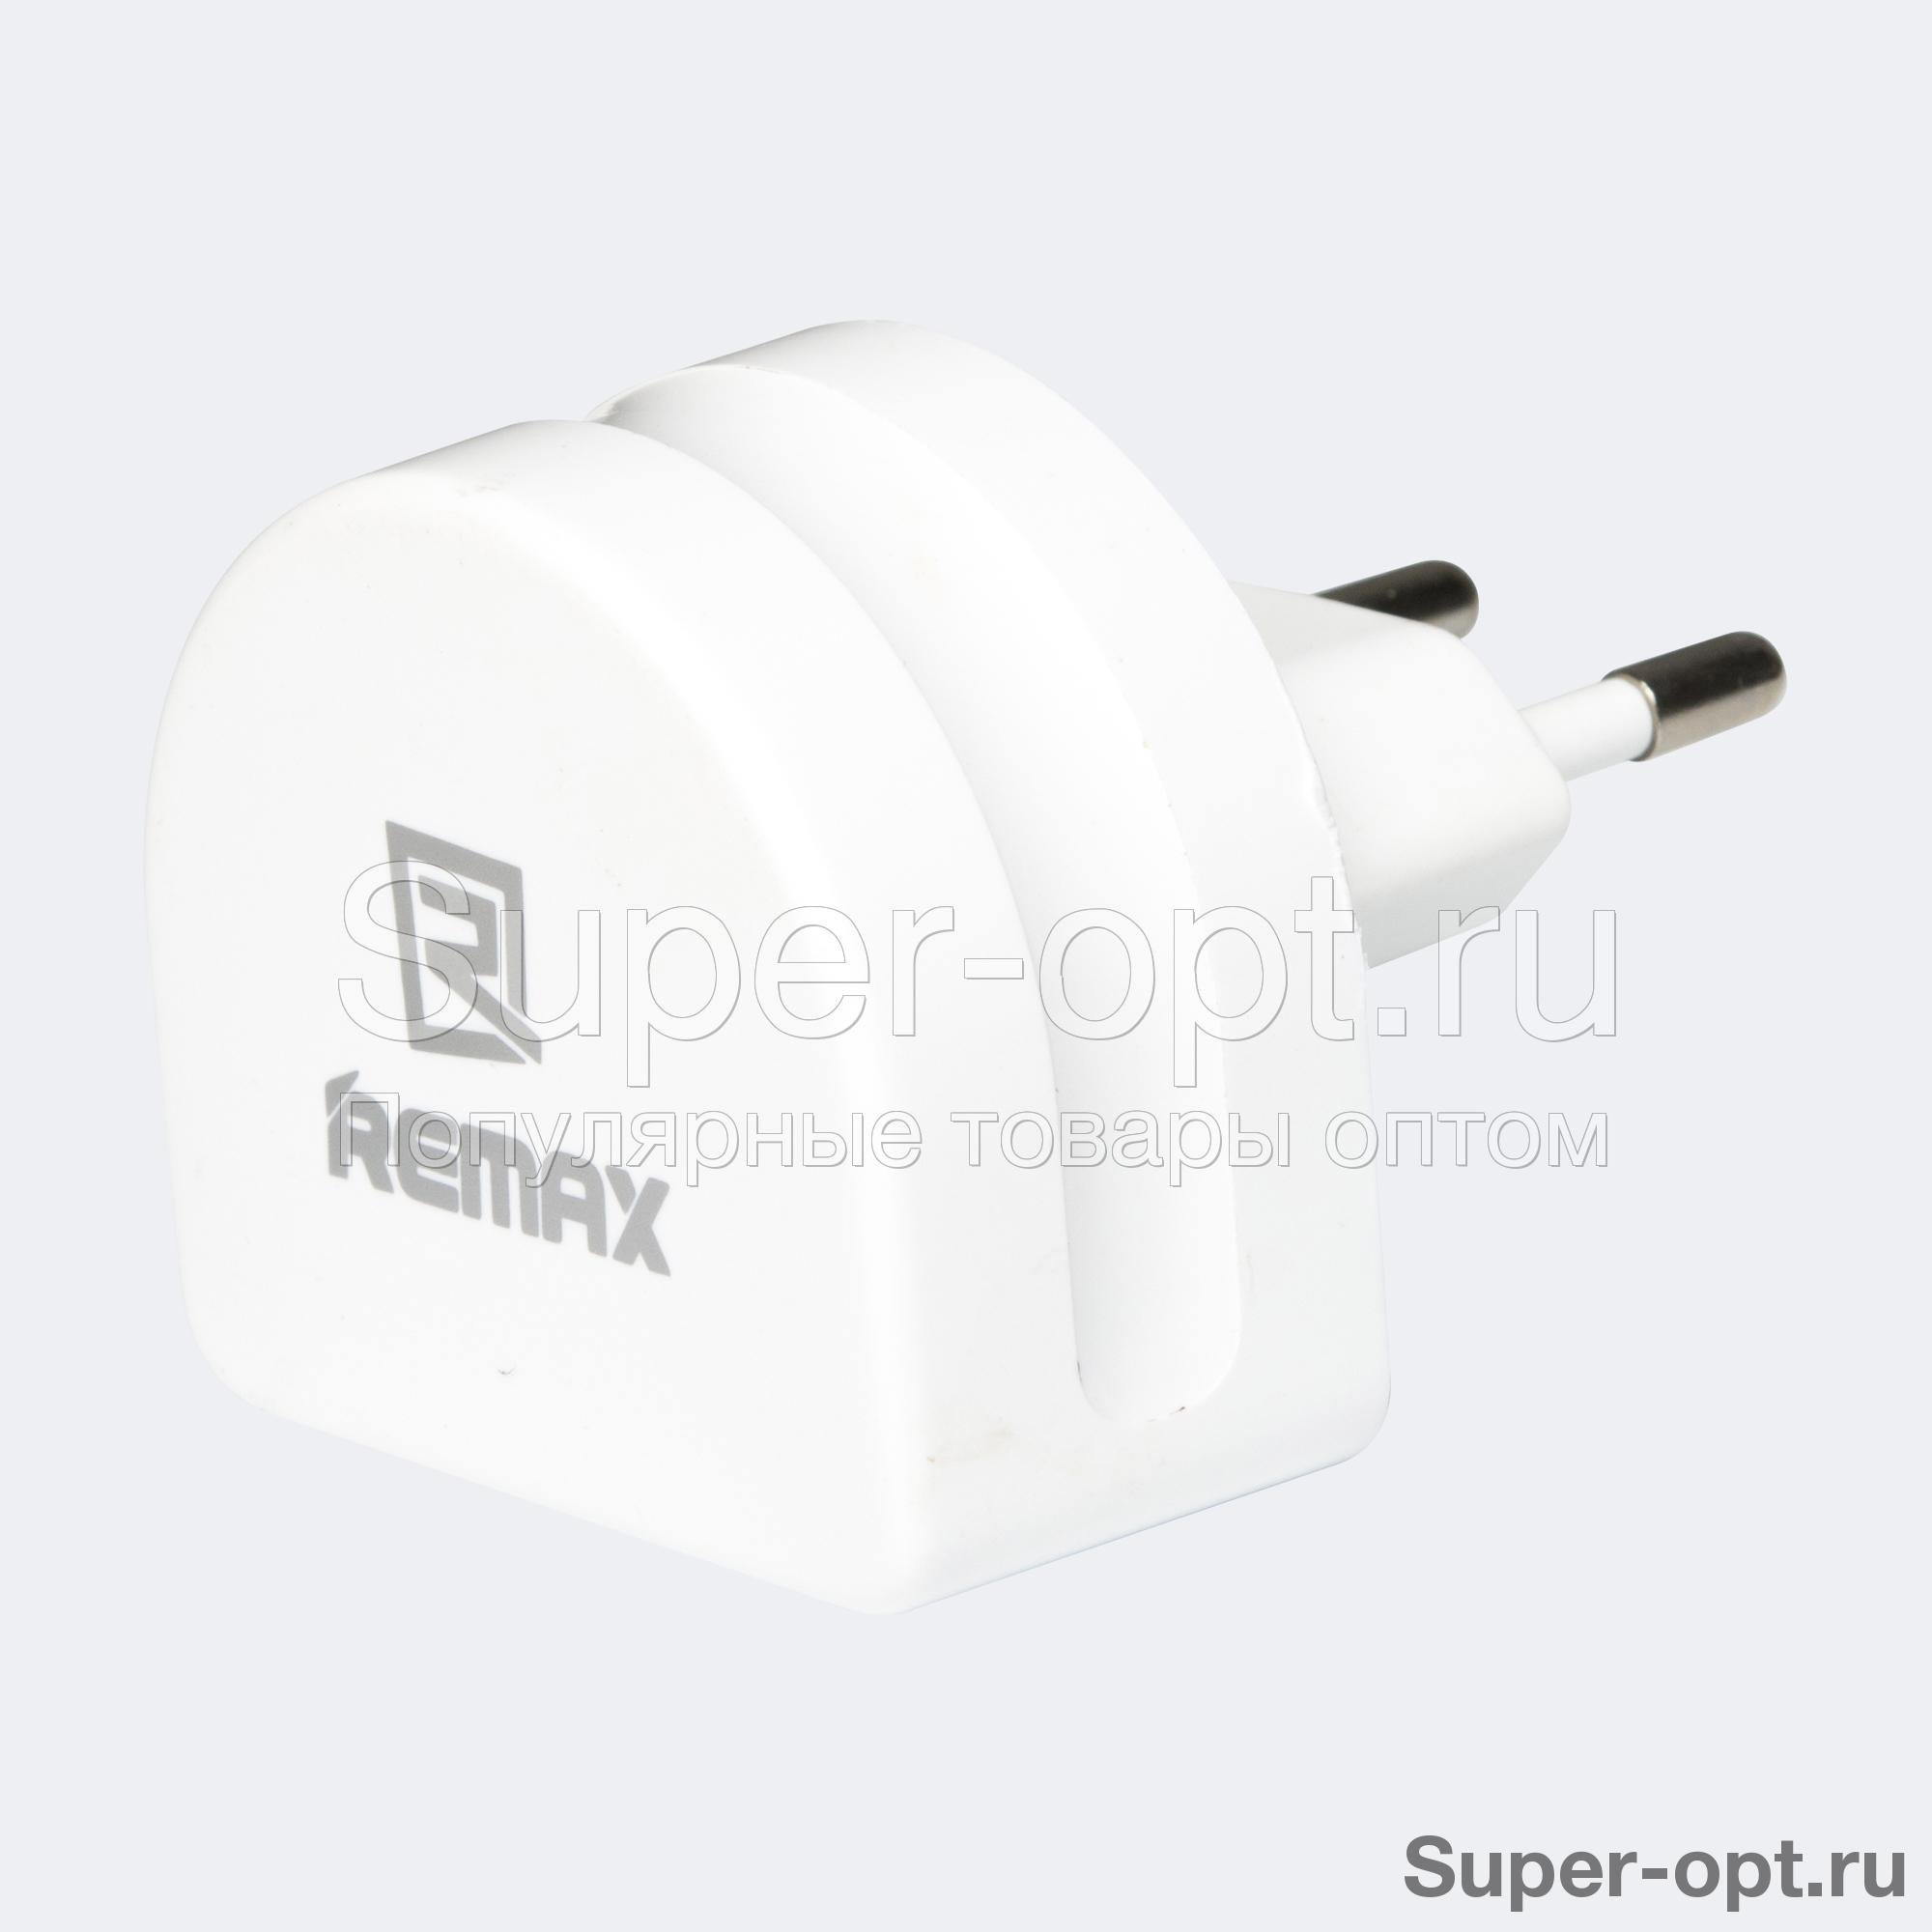 Сетевой USB адаптер Remax RMT7188